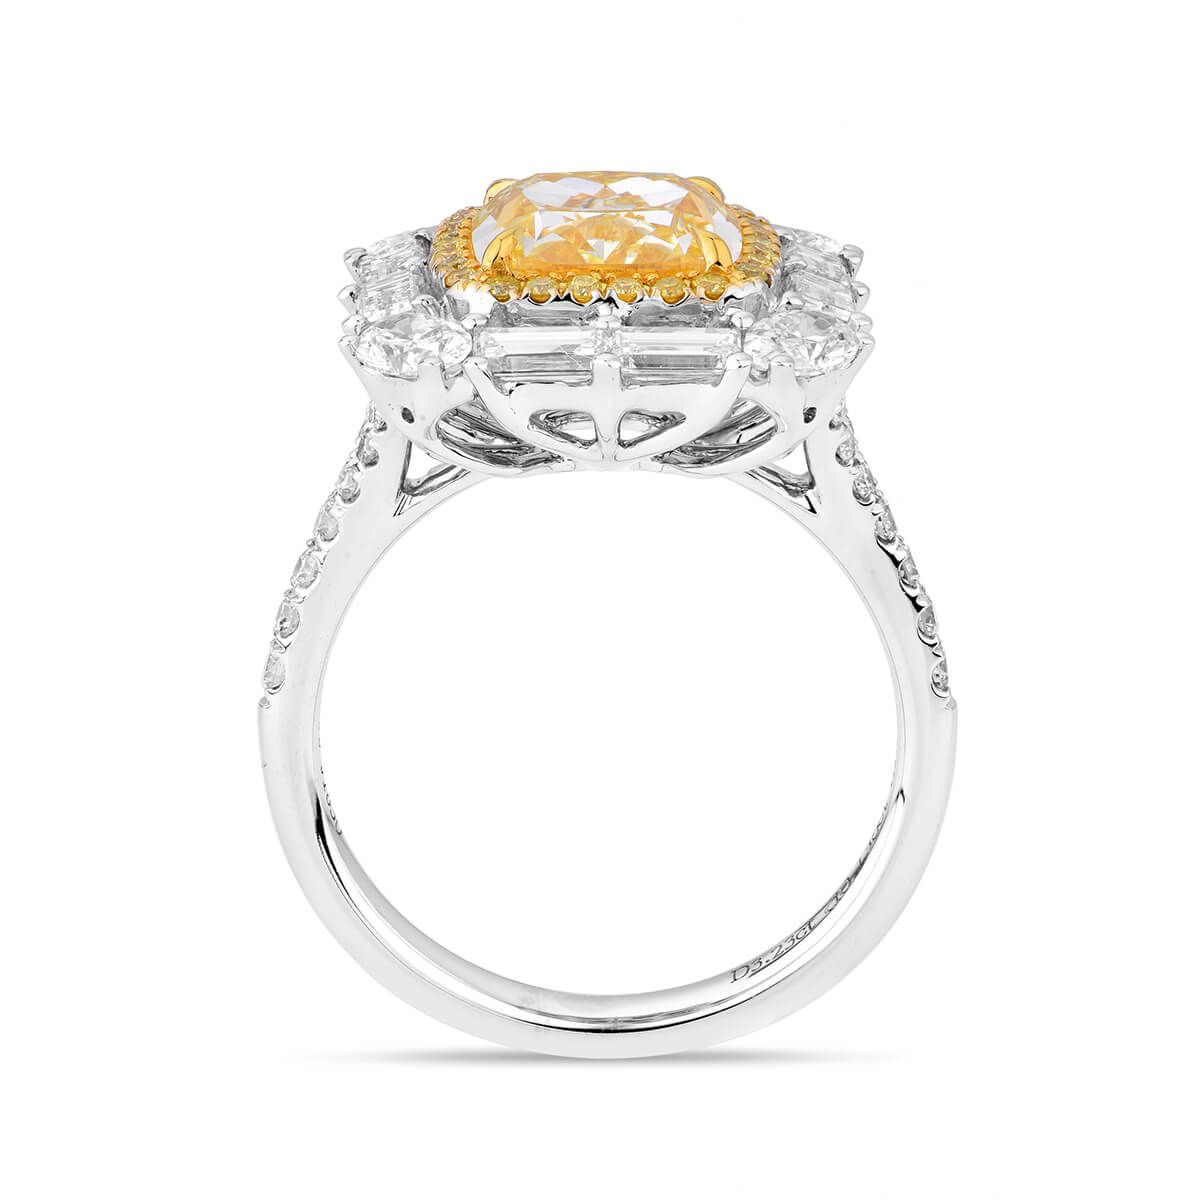 Fancy Light Yellow Diamond Ring, 3.23 Ct. (5.02 Ct. TW), Cushion shape, GIA Certified, 2195410425